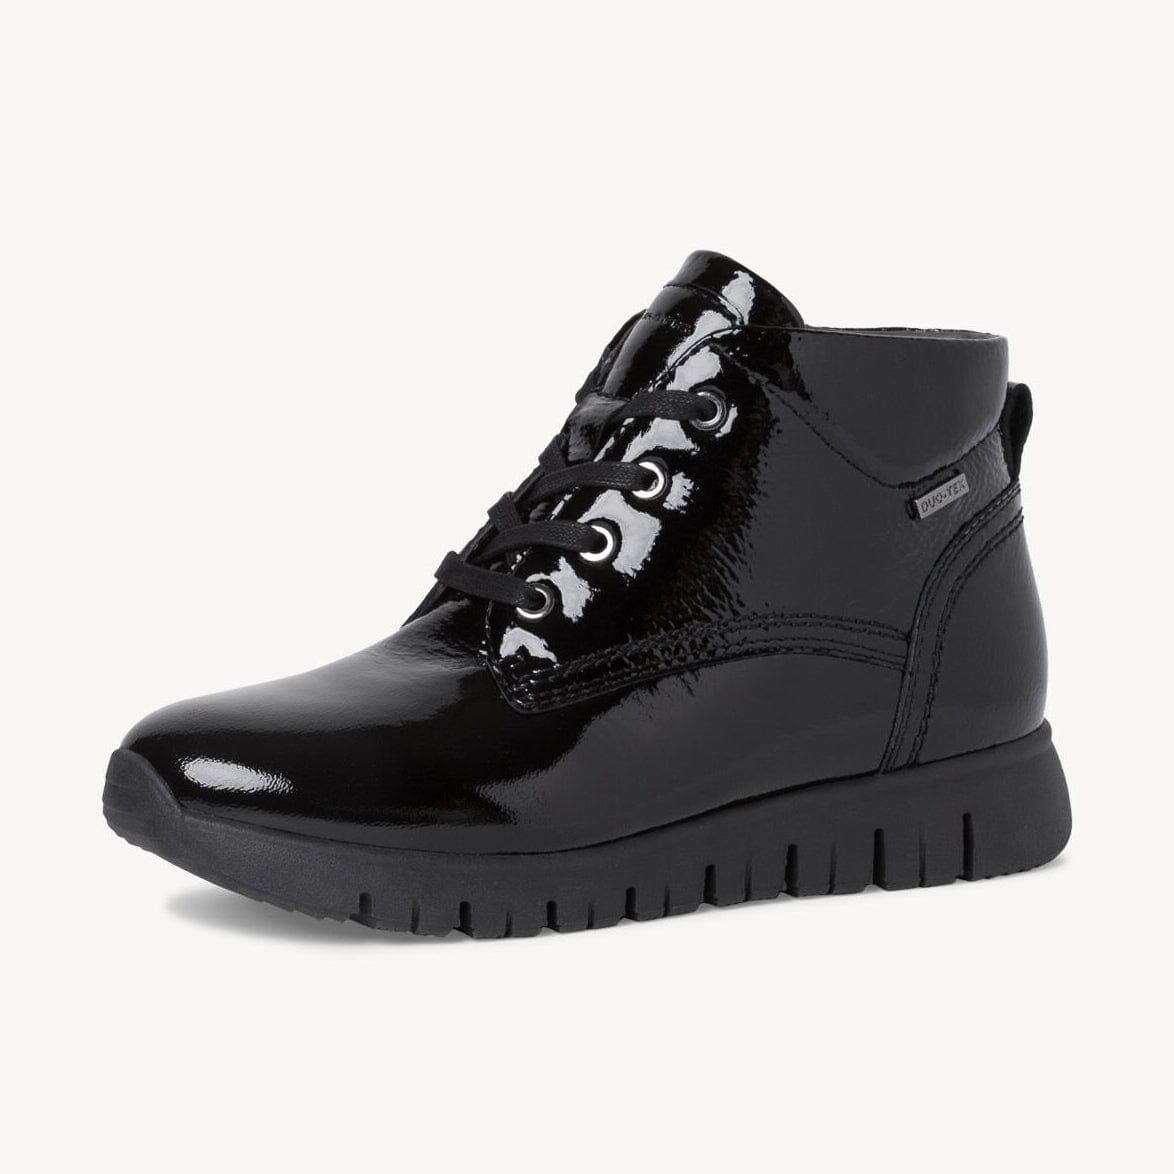 Tamaris Unisex Duo Tex Leather Patent Boots Unisex Shoes Shafi Pvt. Limited Black EUR 36 